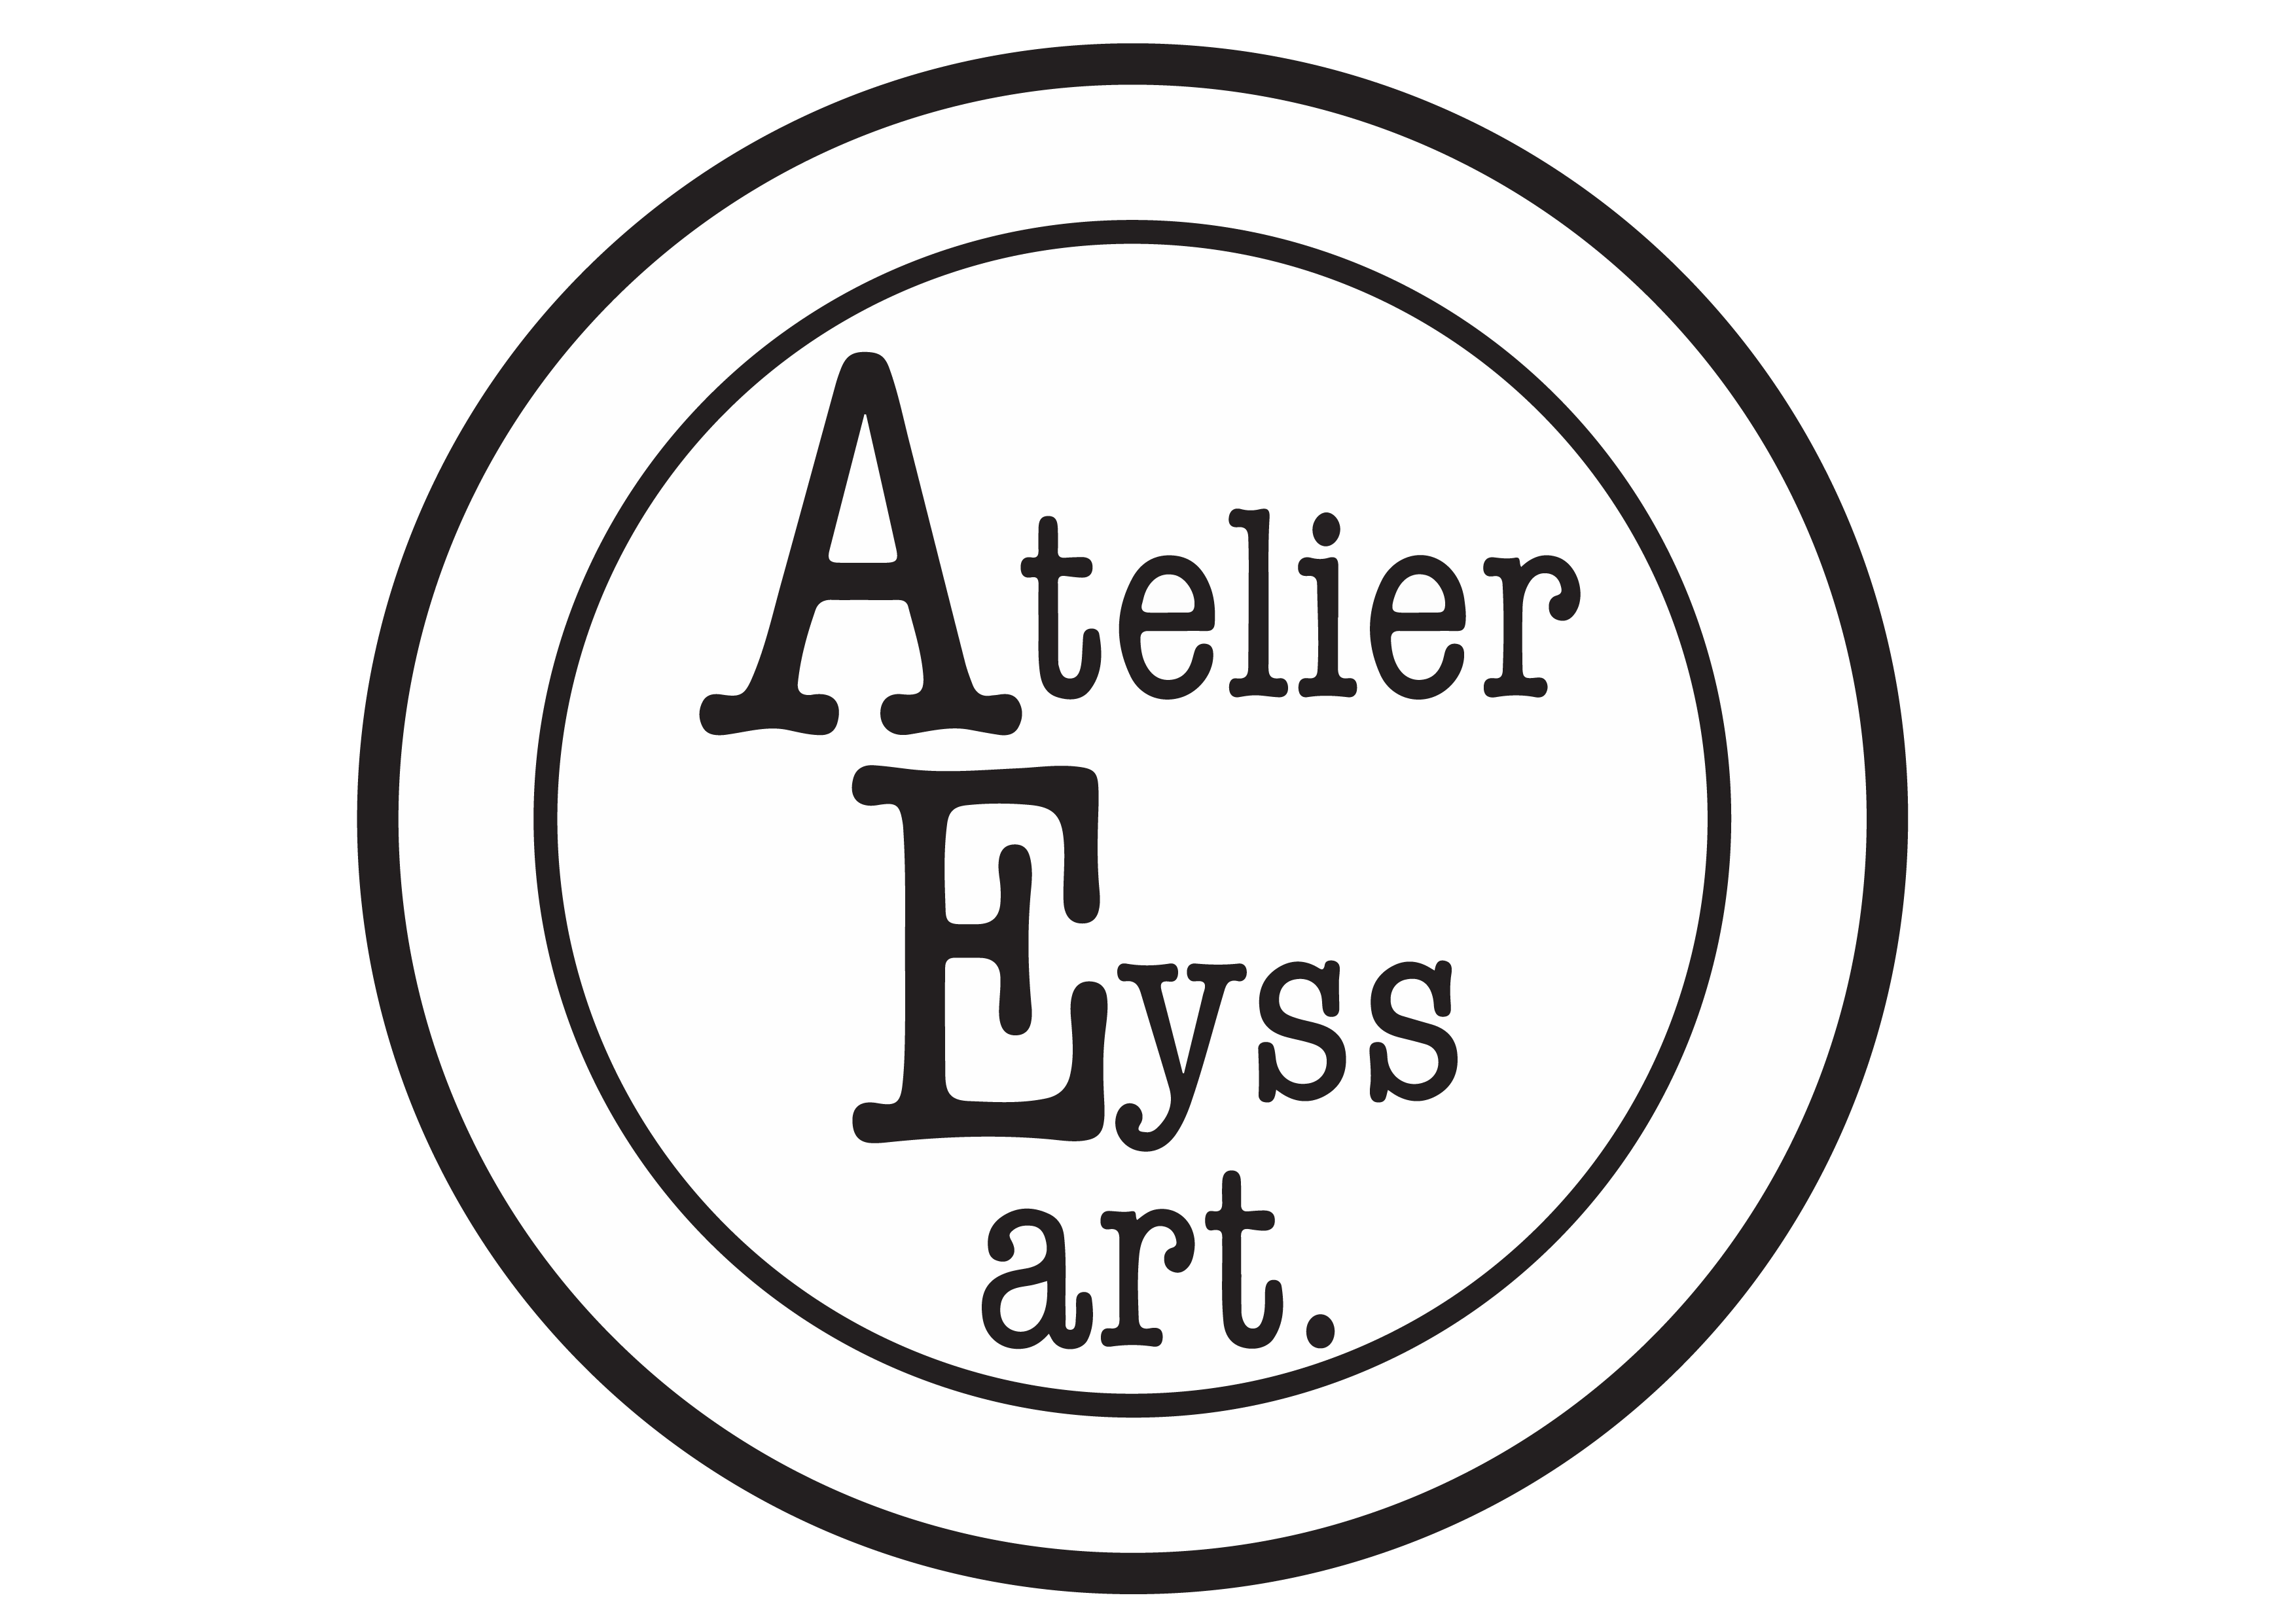 Atelier Eyssart